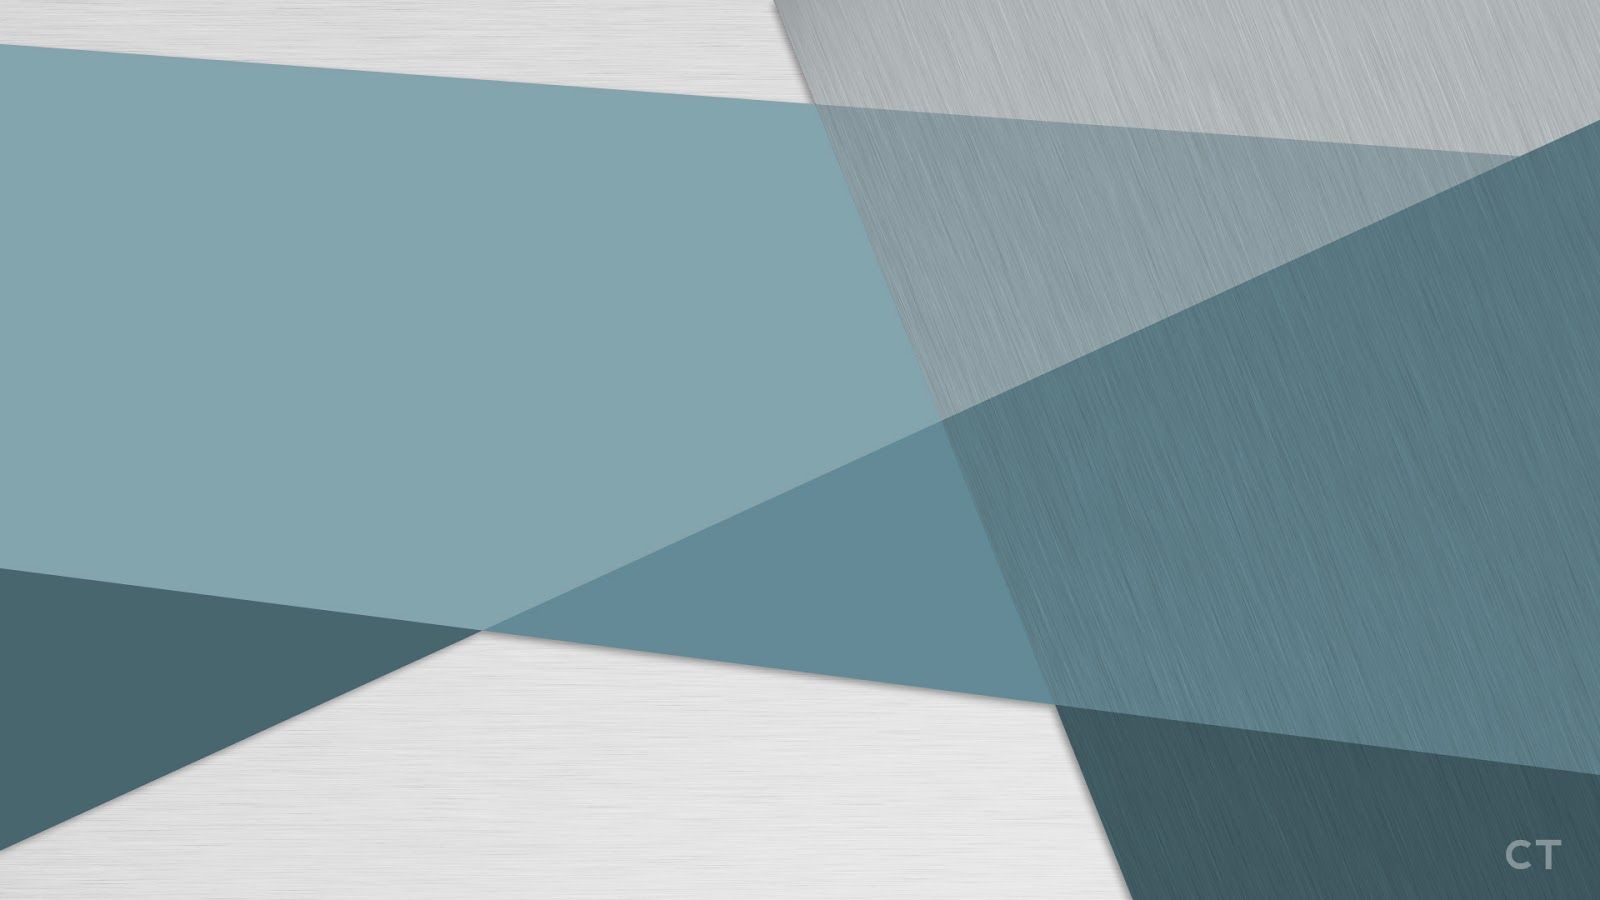 CwThornbrugh: Geometric Desktop Backgrounds